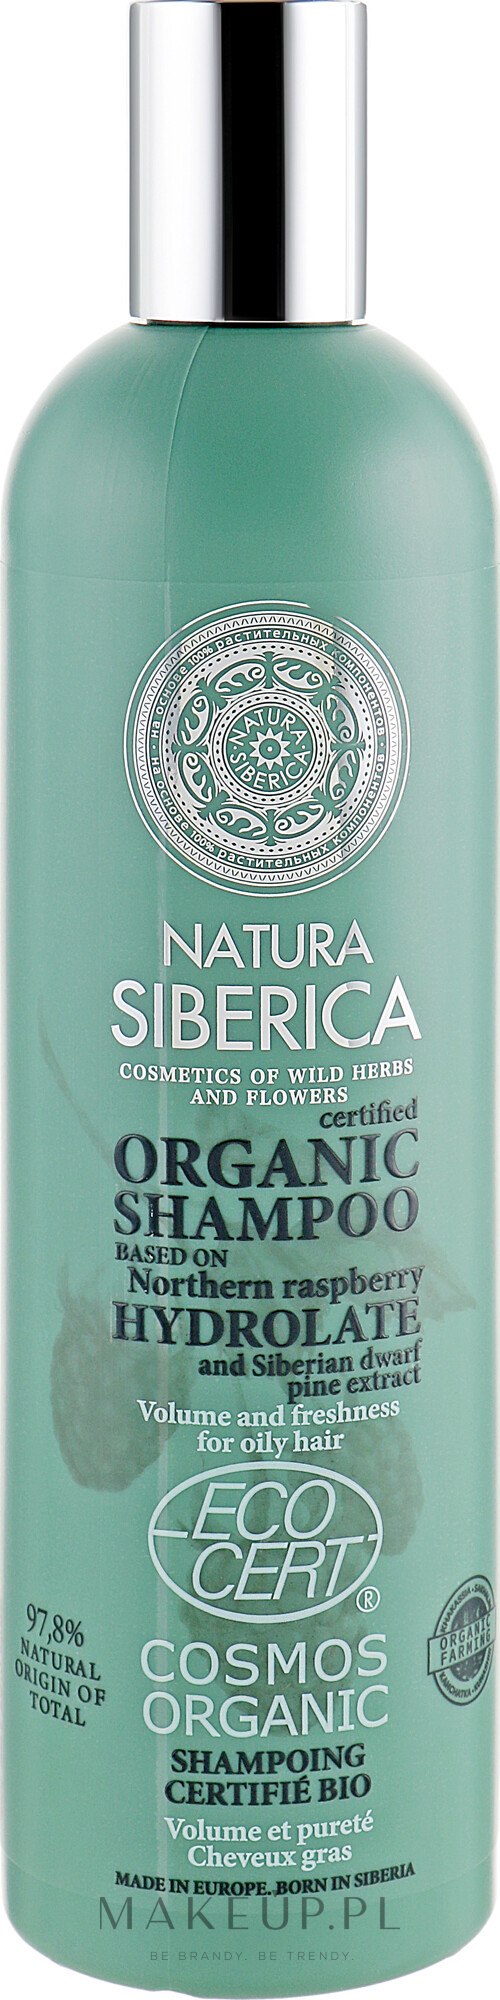 szampon natura siberica objetosc wizaz